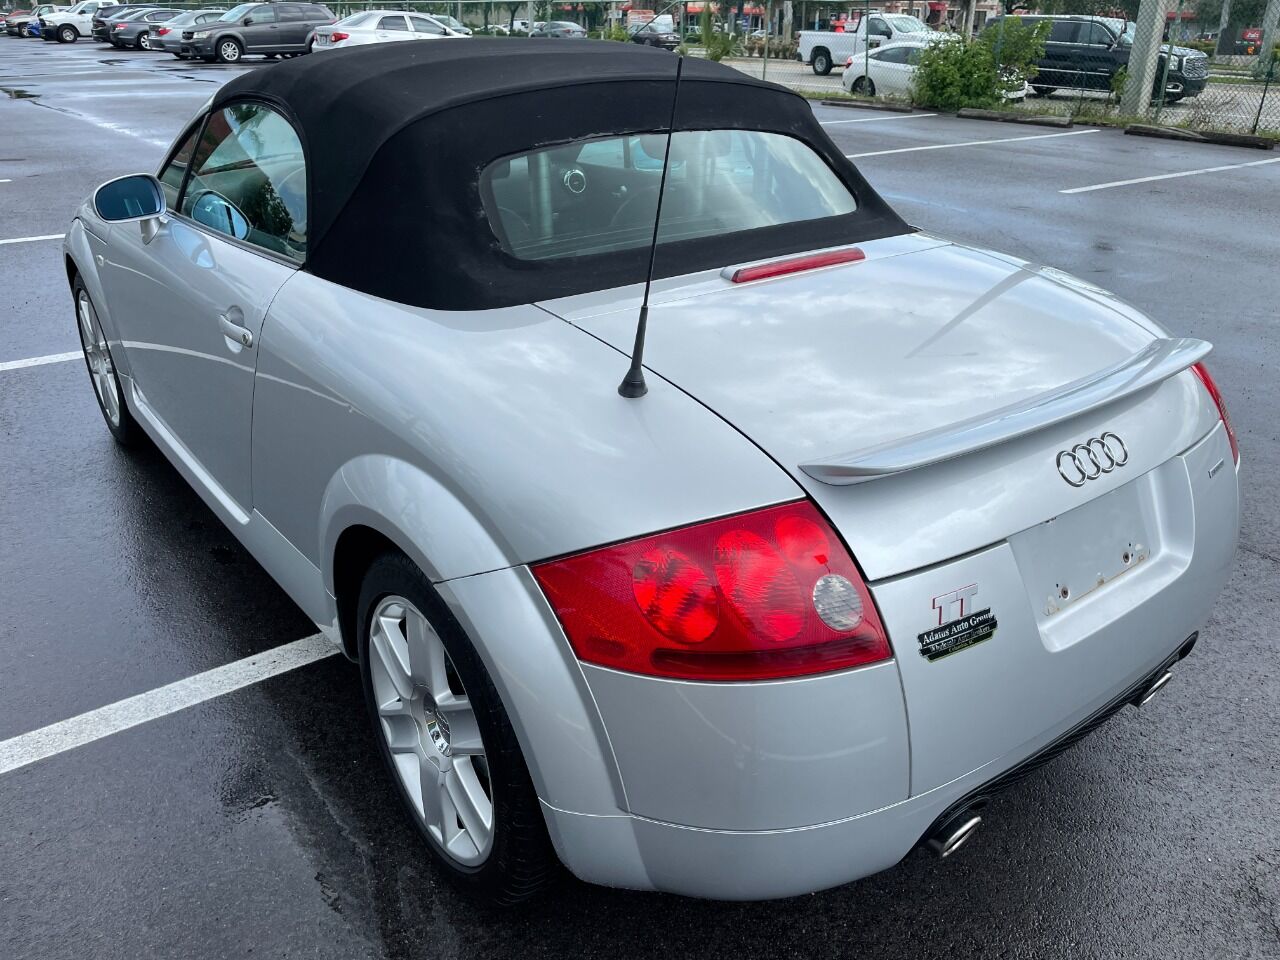 2001 Audi TT Convertible - $8,900